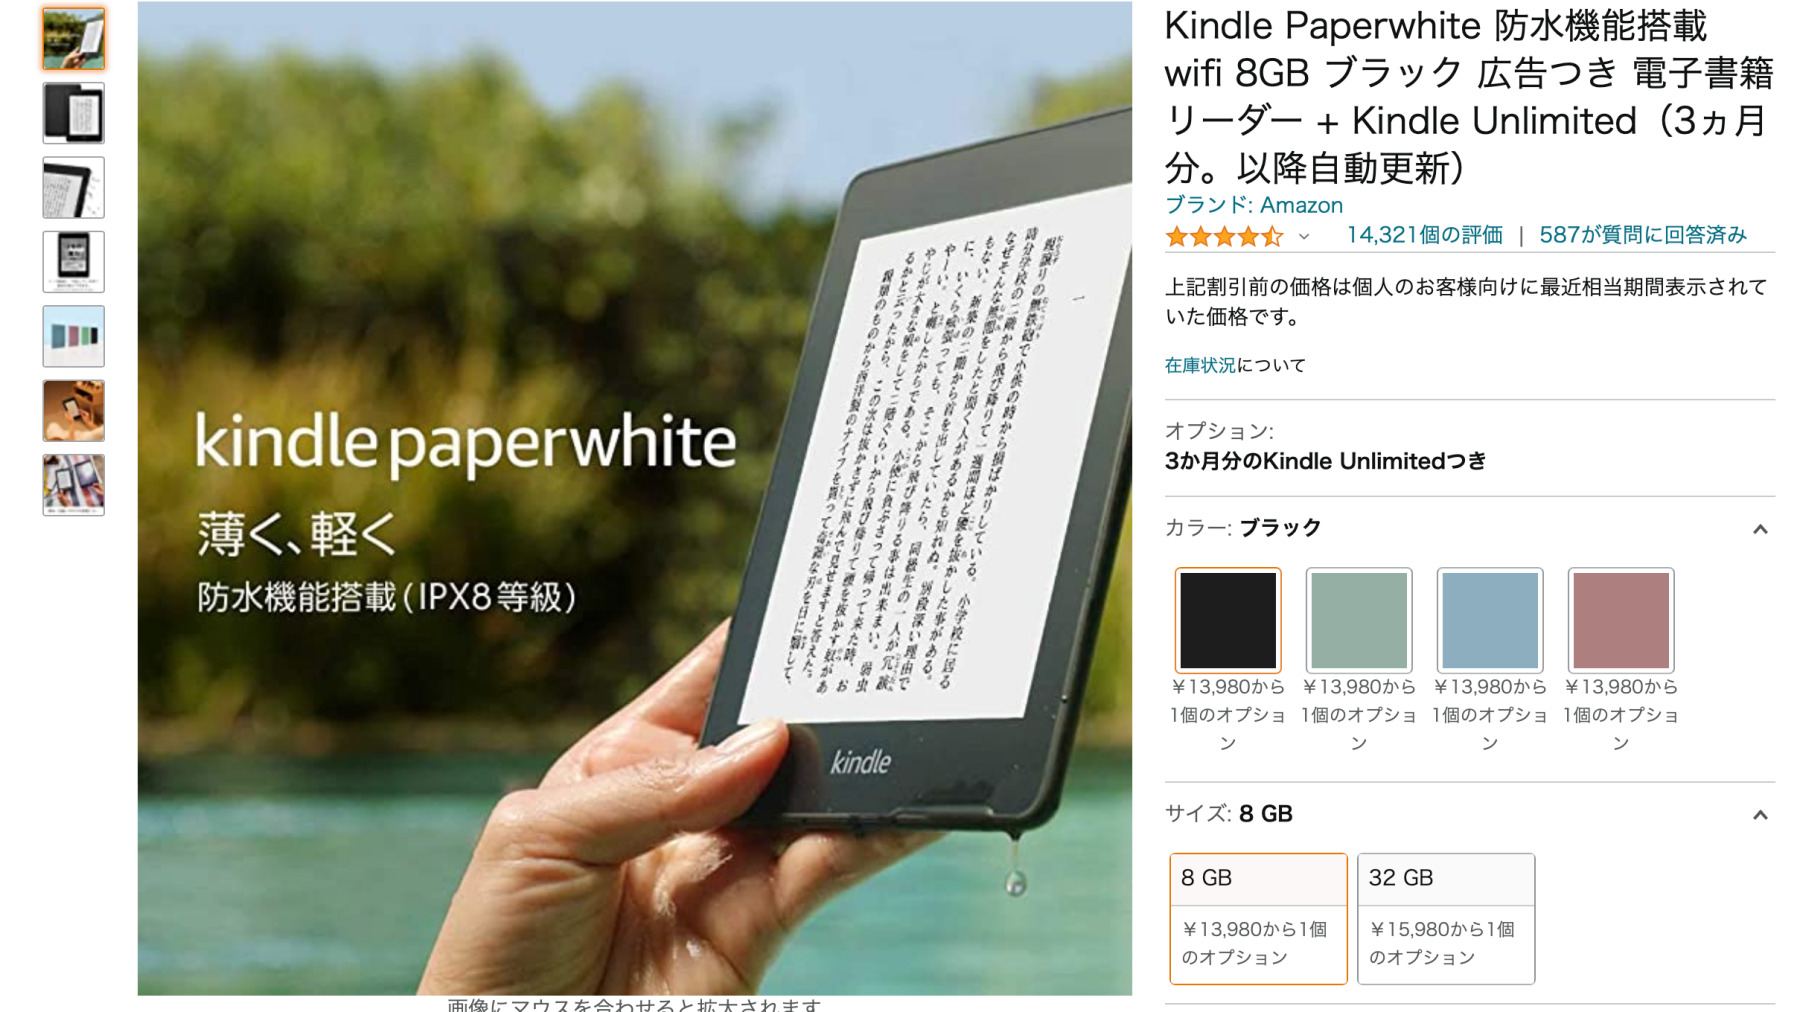 Kindle Paperwhite 旧モデル